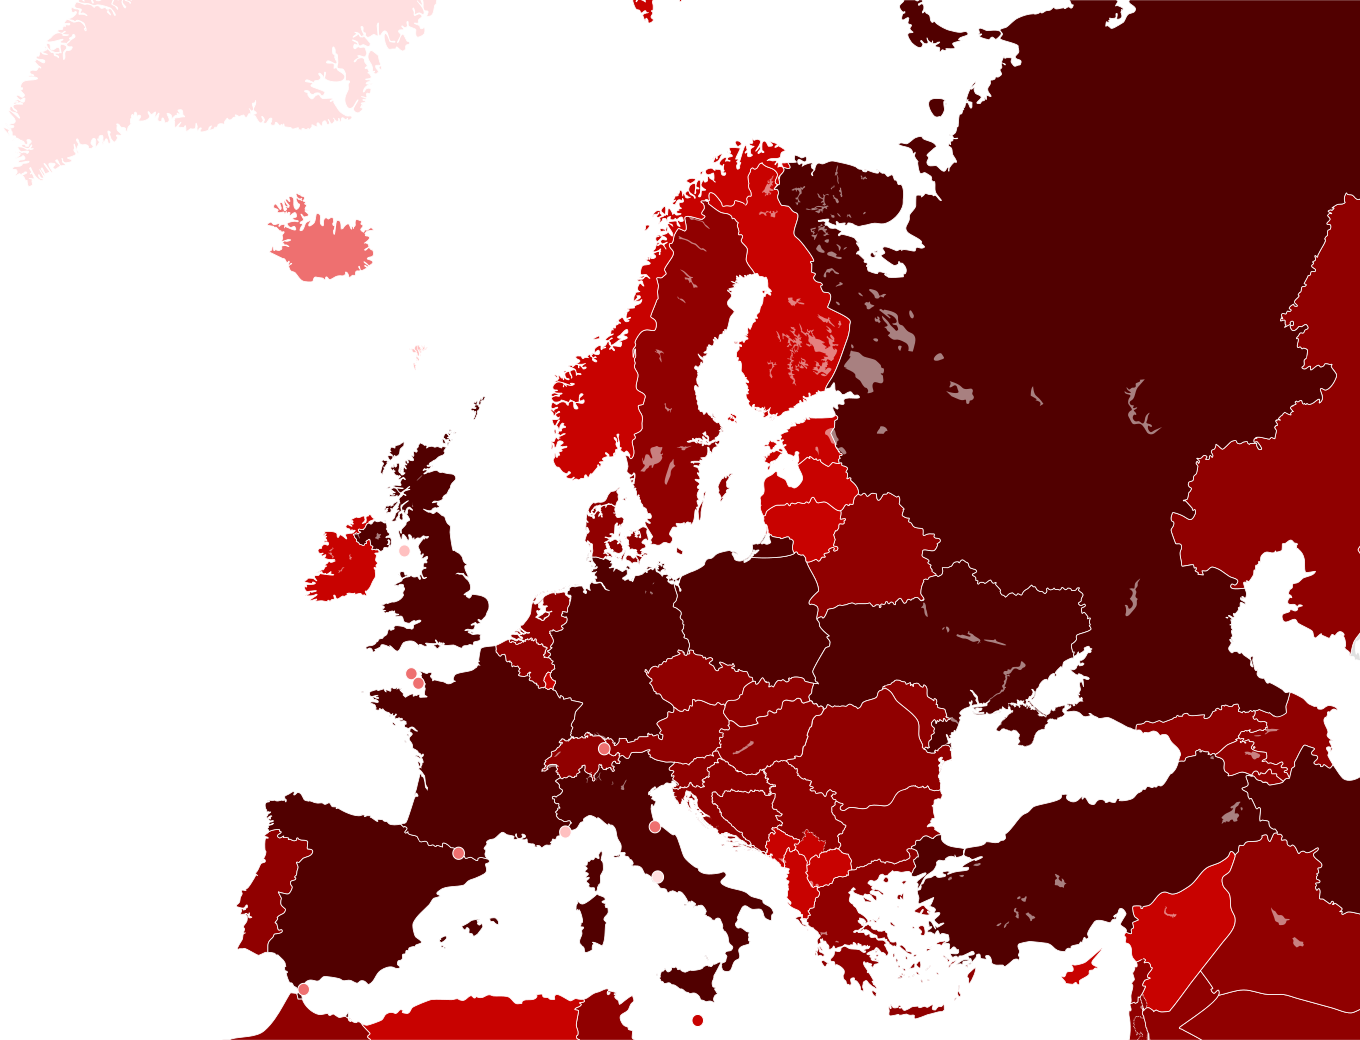 European cities affected by coronavirus mage: wikipedia